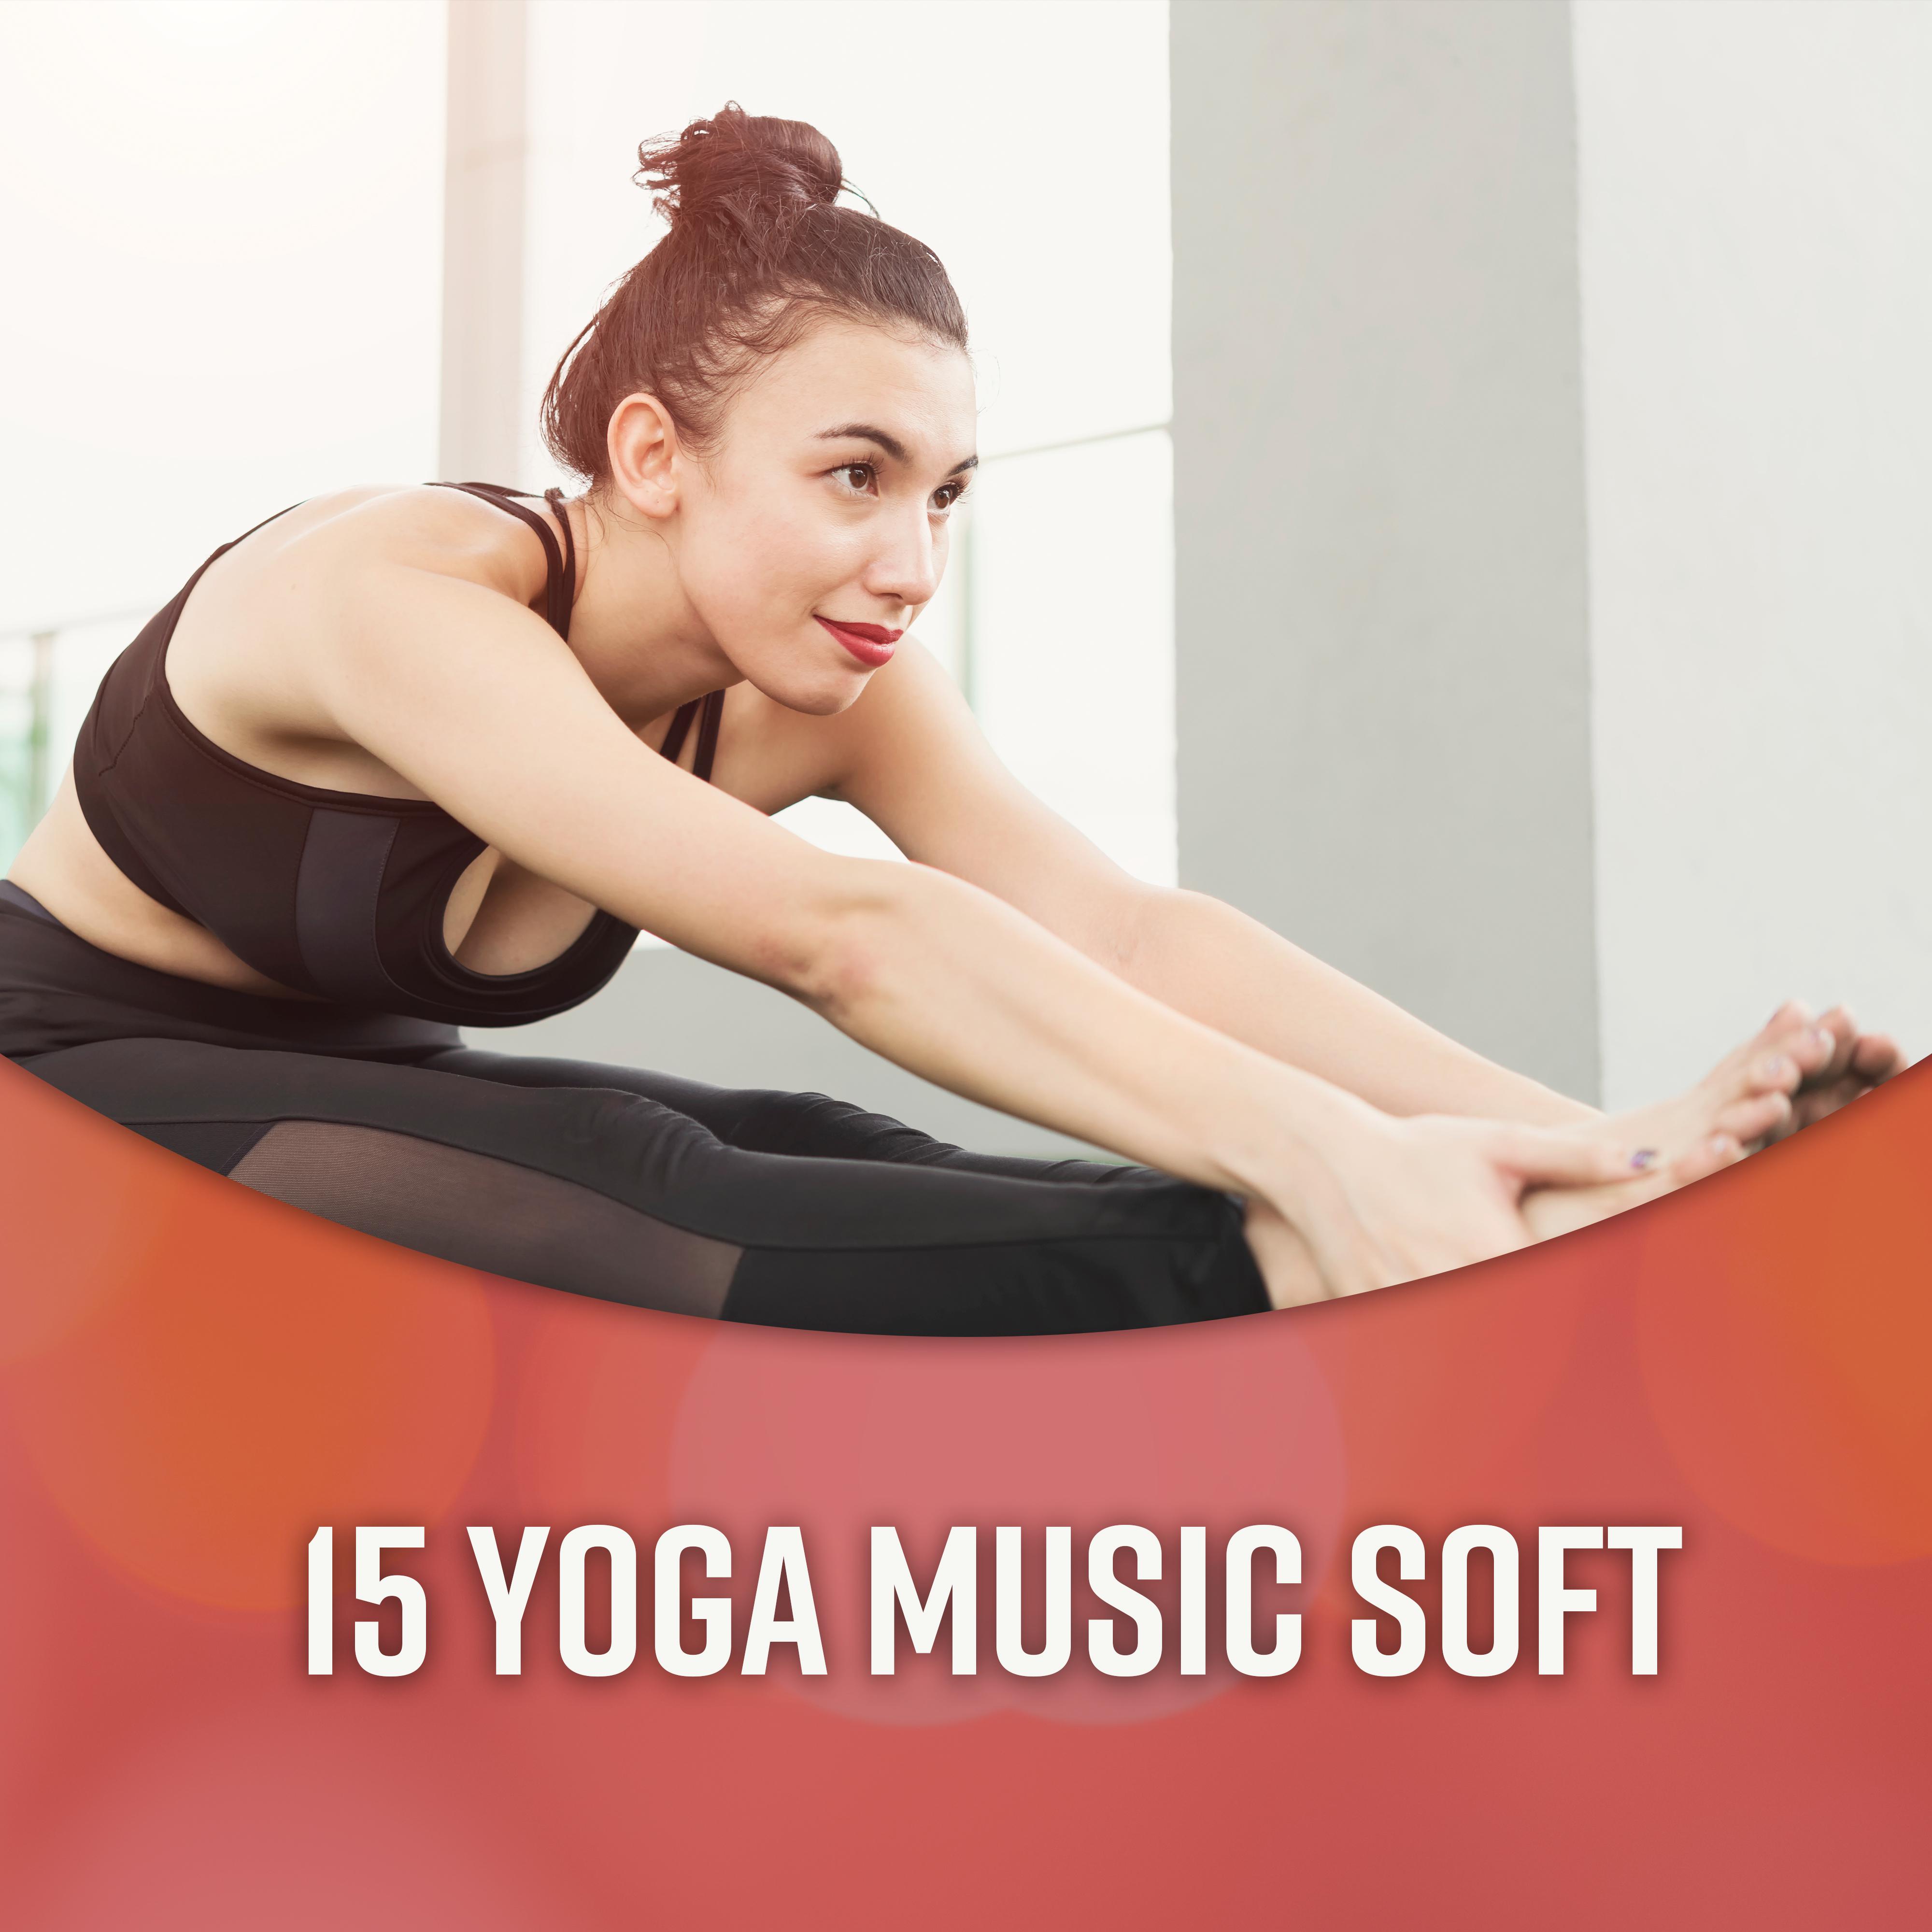 15 Yoga Music Soft